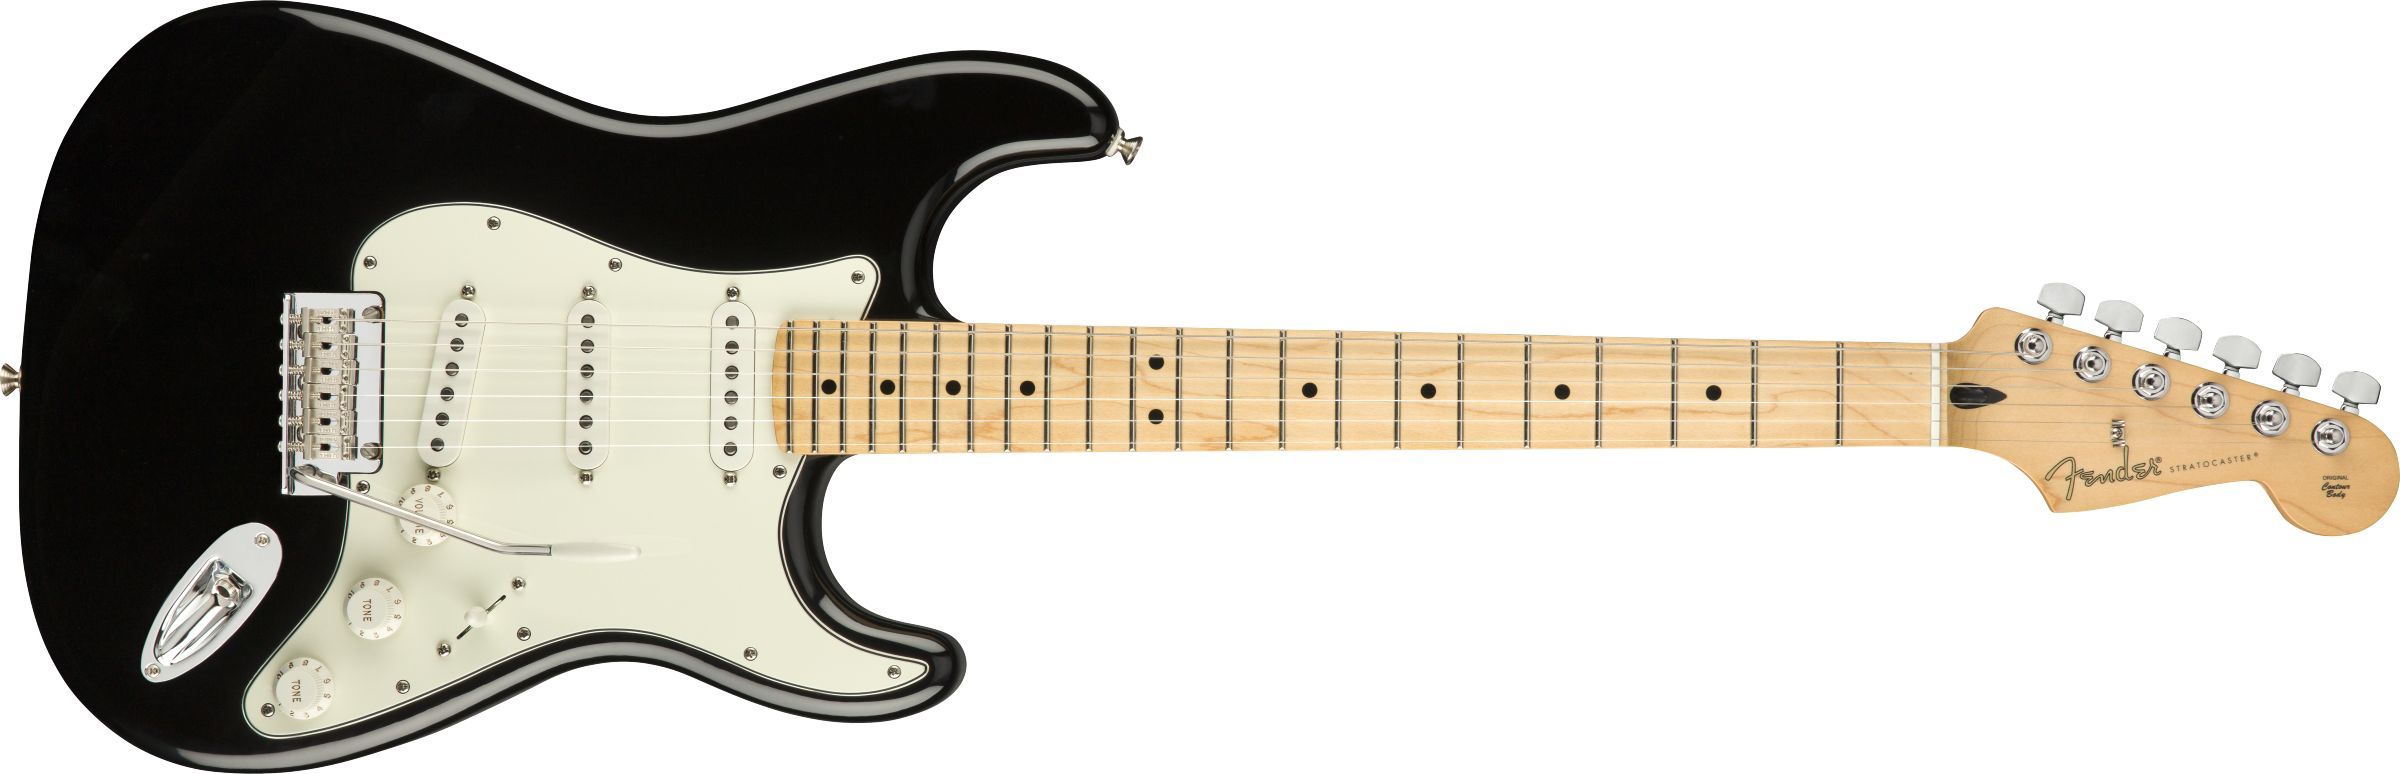 Электрогитара Fender Stratocaster. Электрогитара Fender 2011 Custom Deluxe Stratocaster. Электрогитара Parksons st150. Электрогитара Squier Vintage modified '70s Stratocaster.